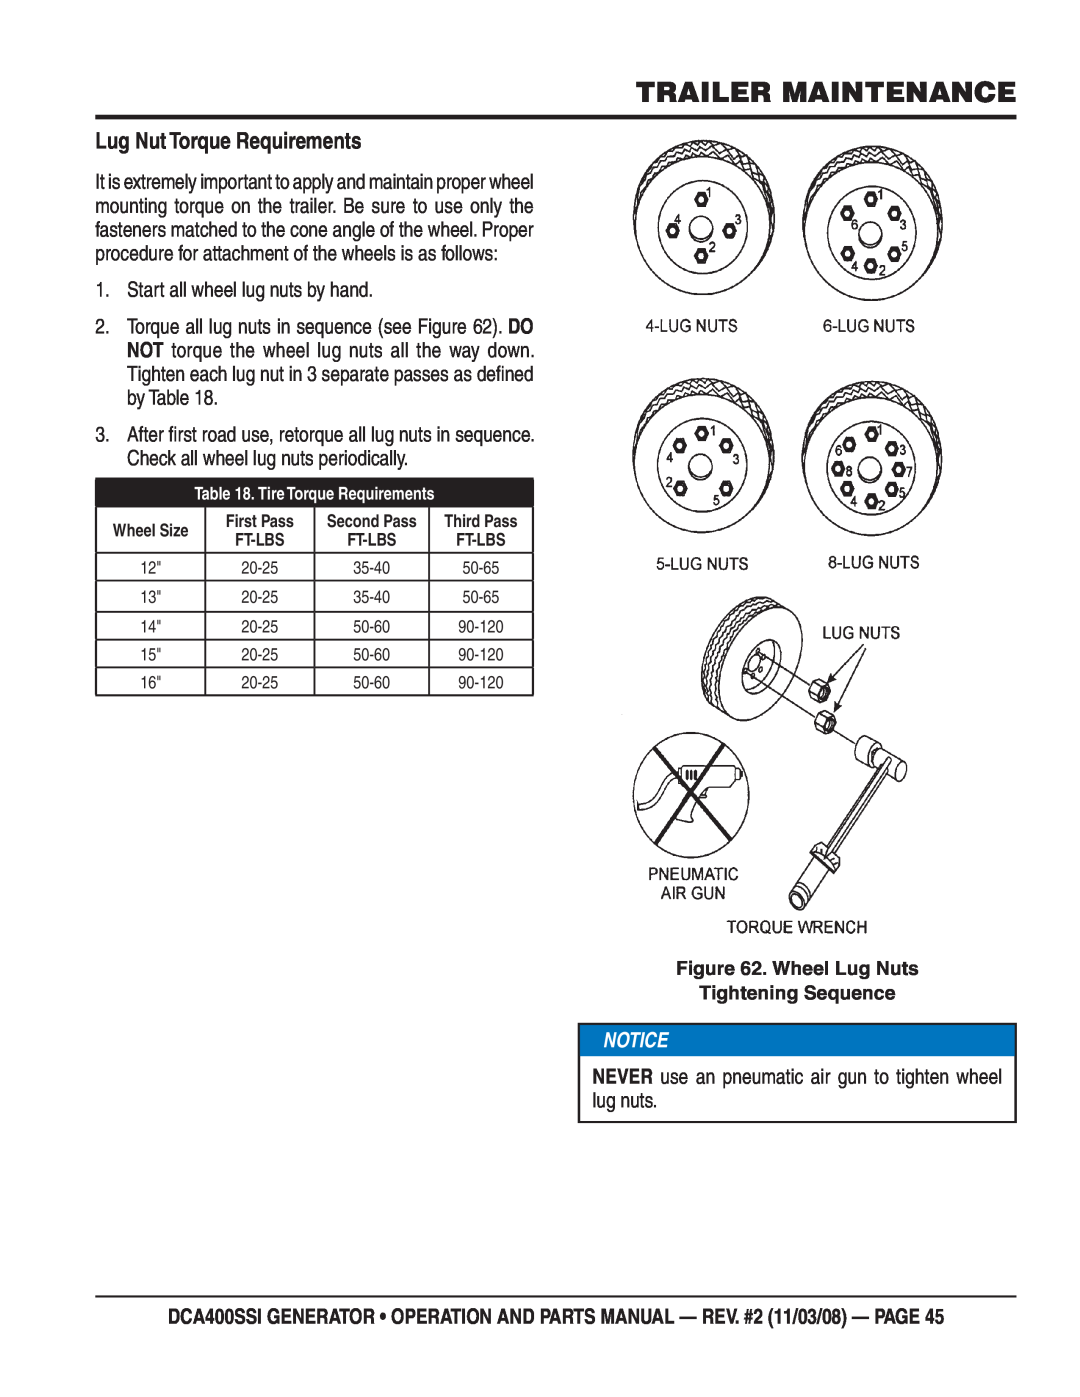 Multiquip DCA400SSI manual Lug Nut Torque Requirements, Trailer Maintenance, Notice 